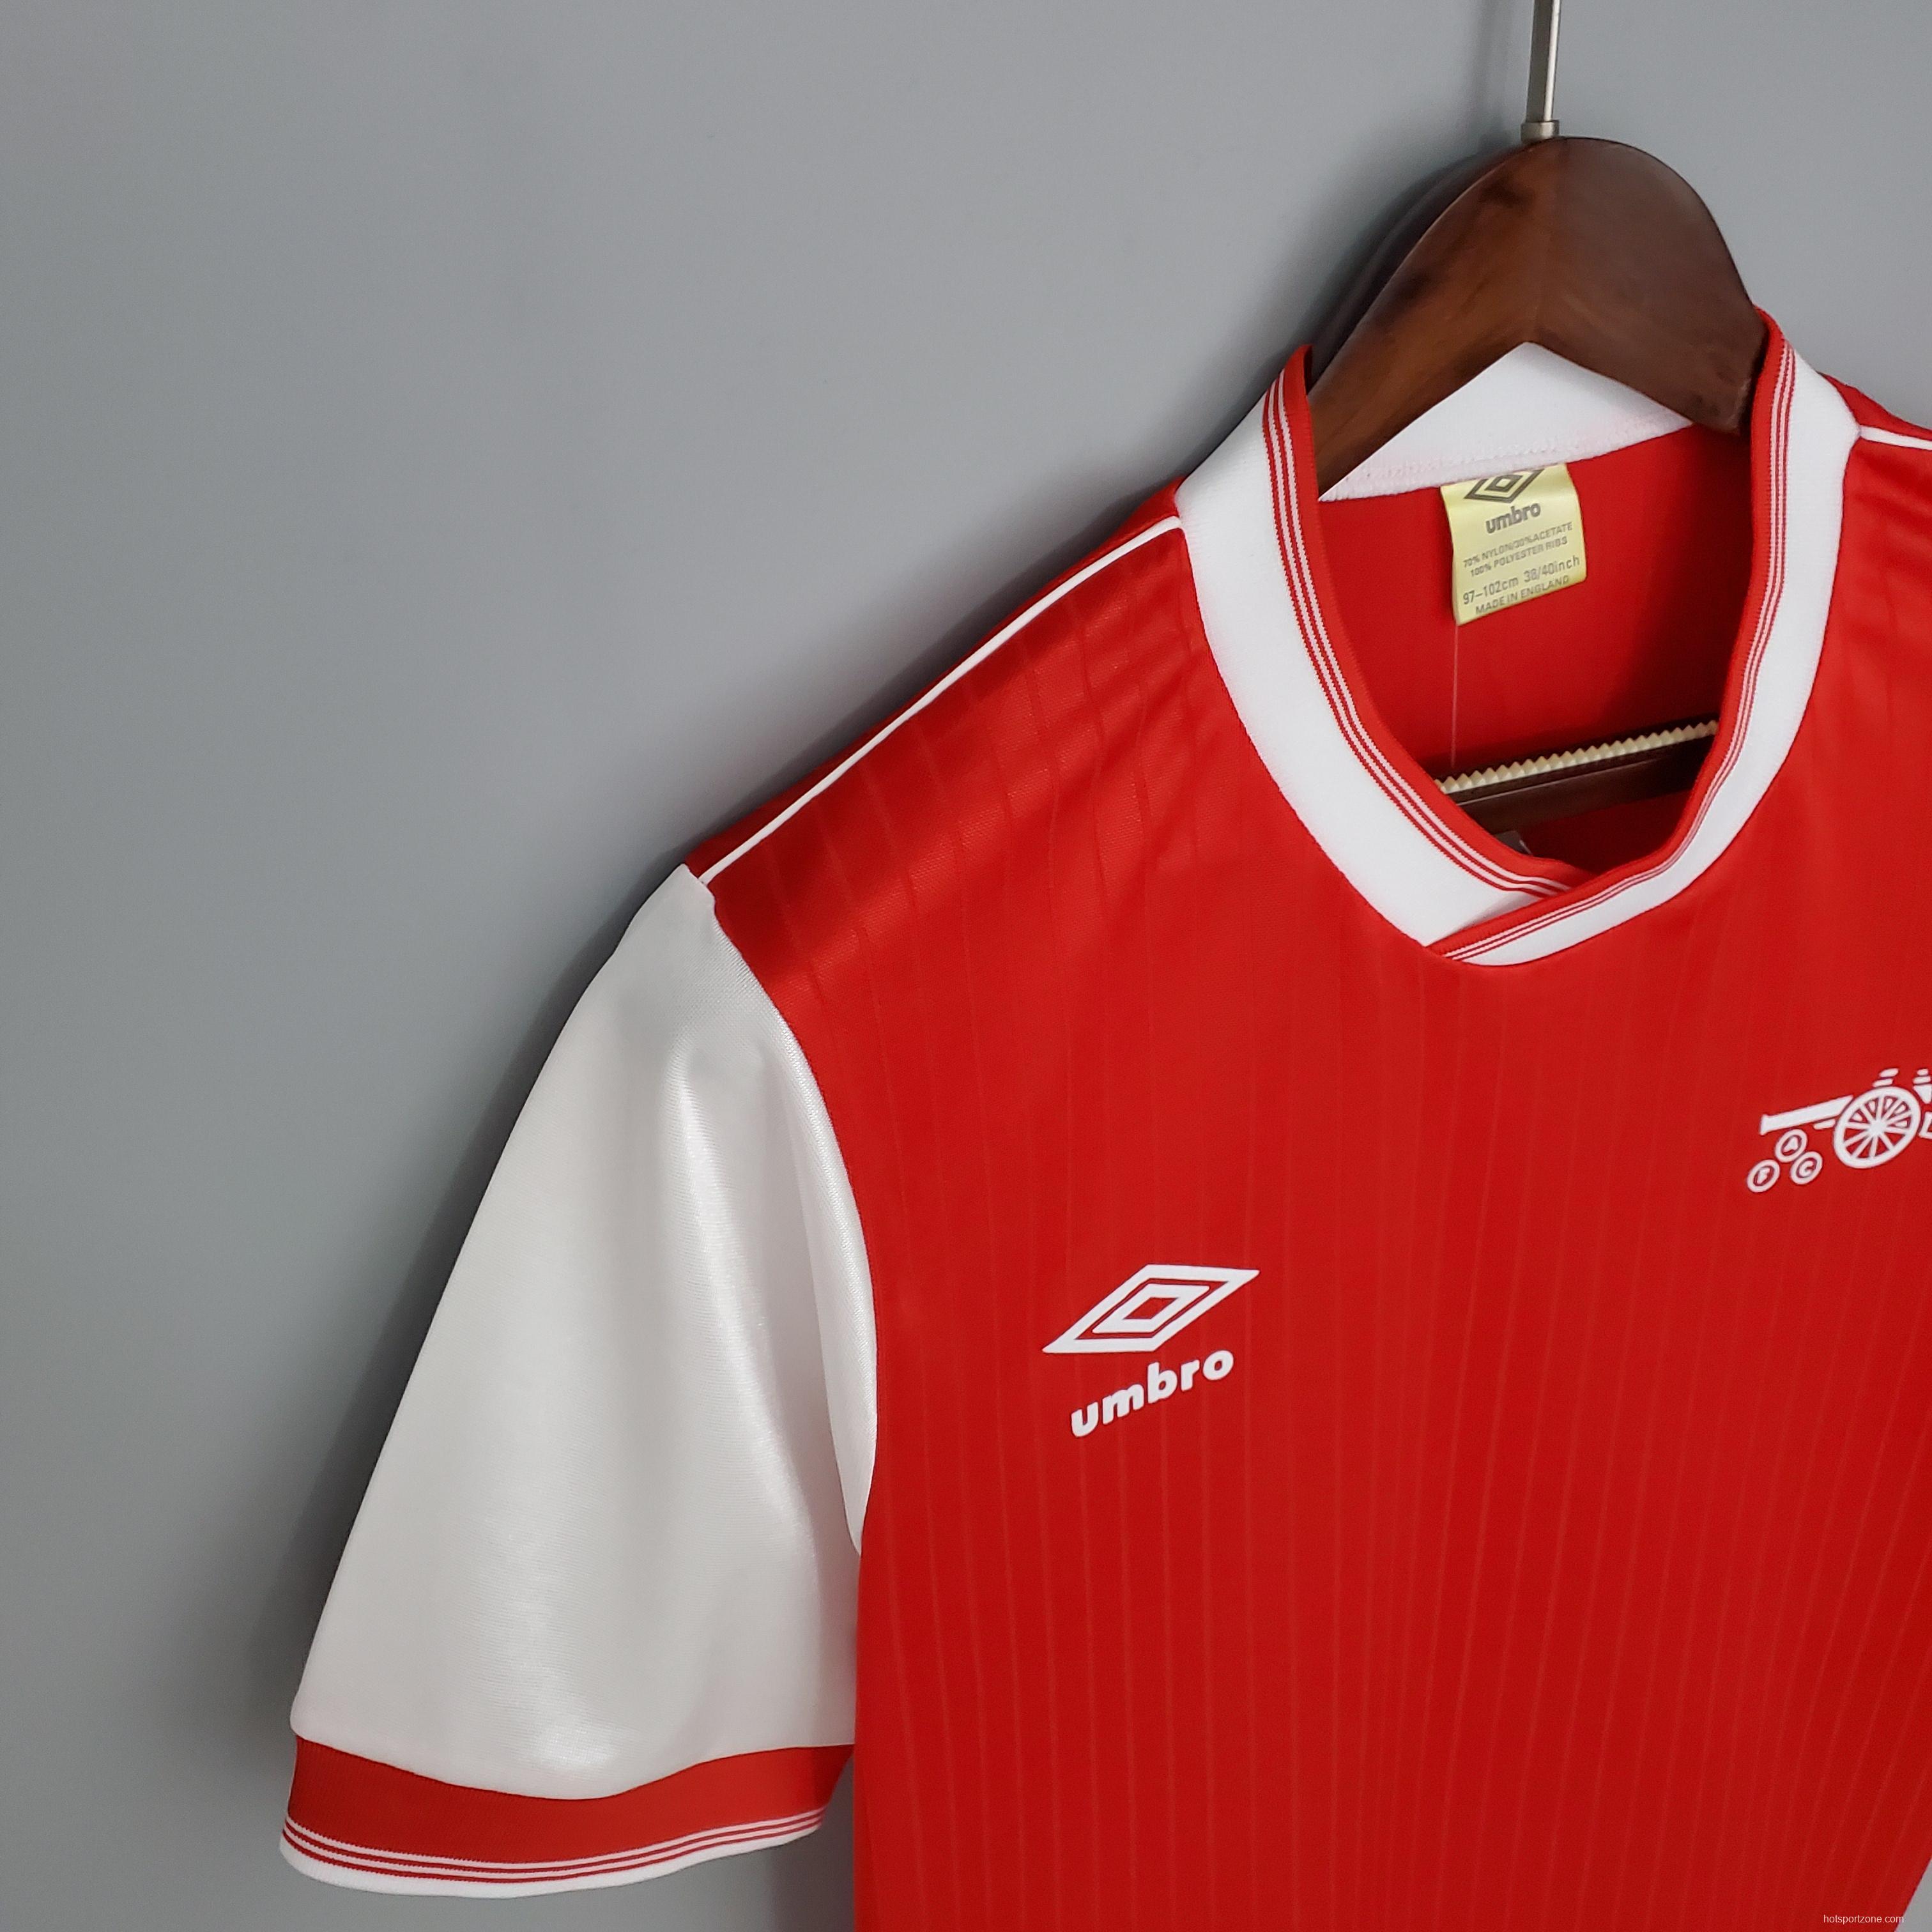 Retro Arsenal 83/86 home Soccer Jersey